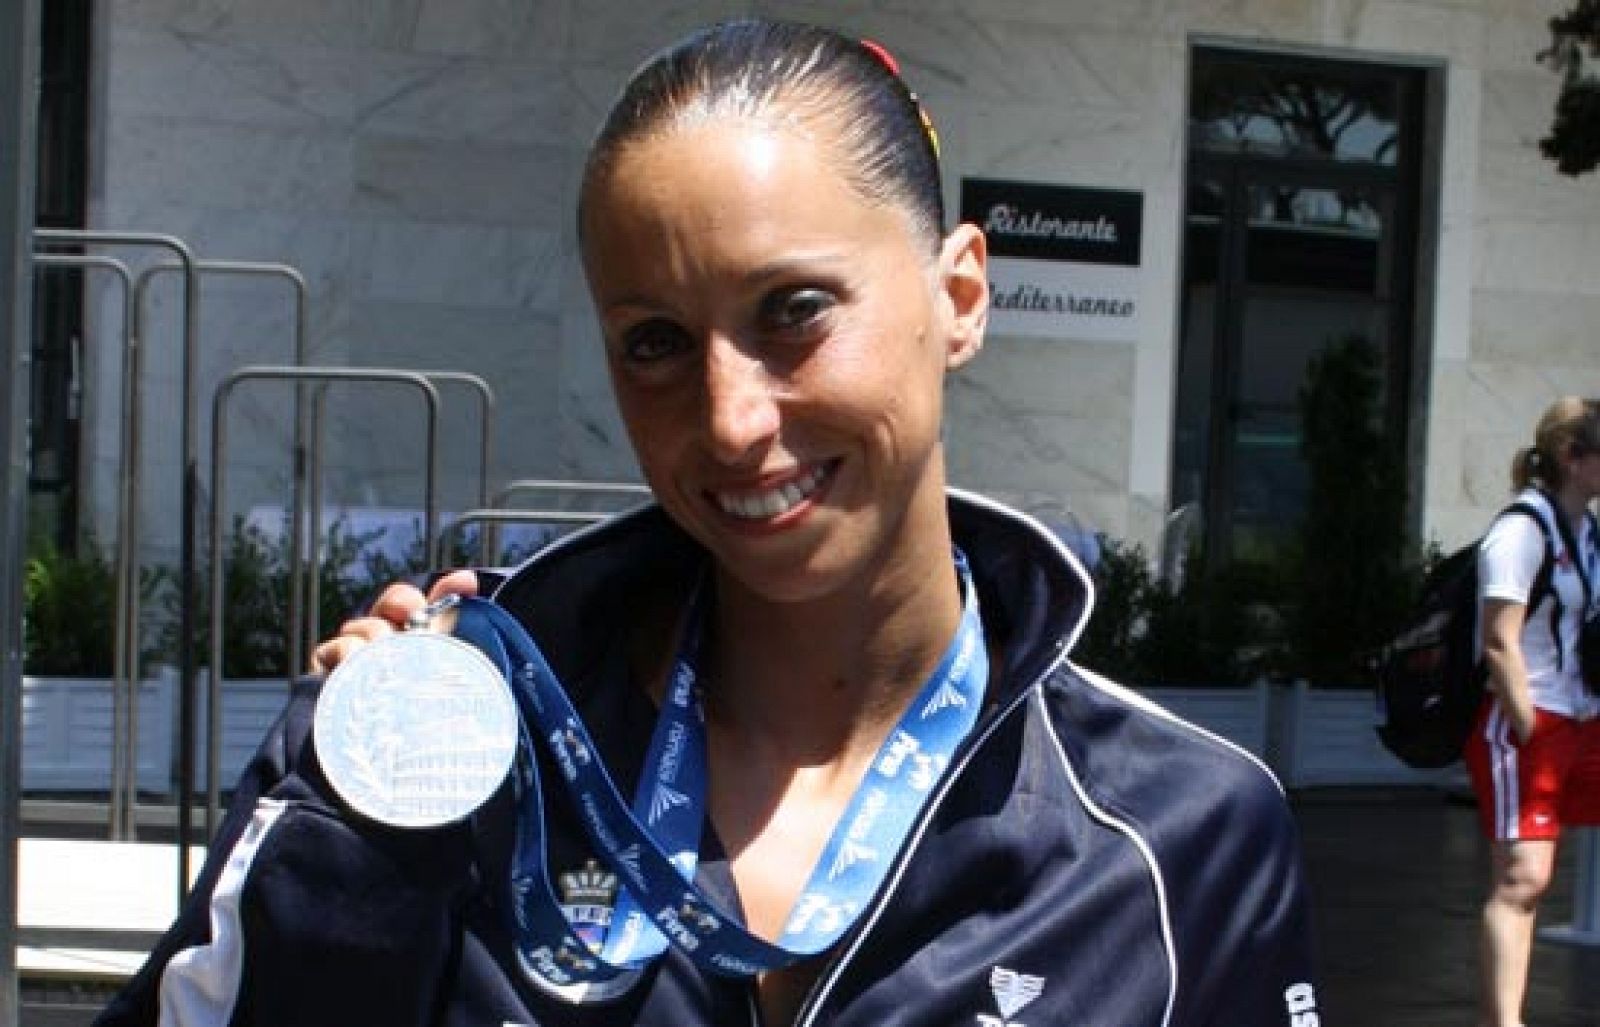 Gemma Mengual consige la plata el en ejercicio de rutina técnica del Mundial de Natación de Roma 09. (20/07/09). 